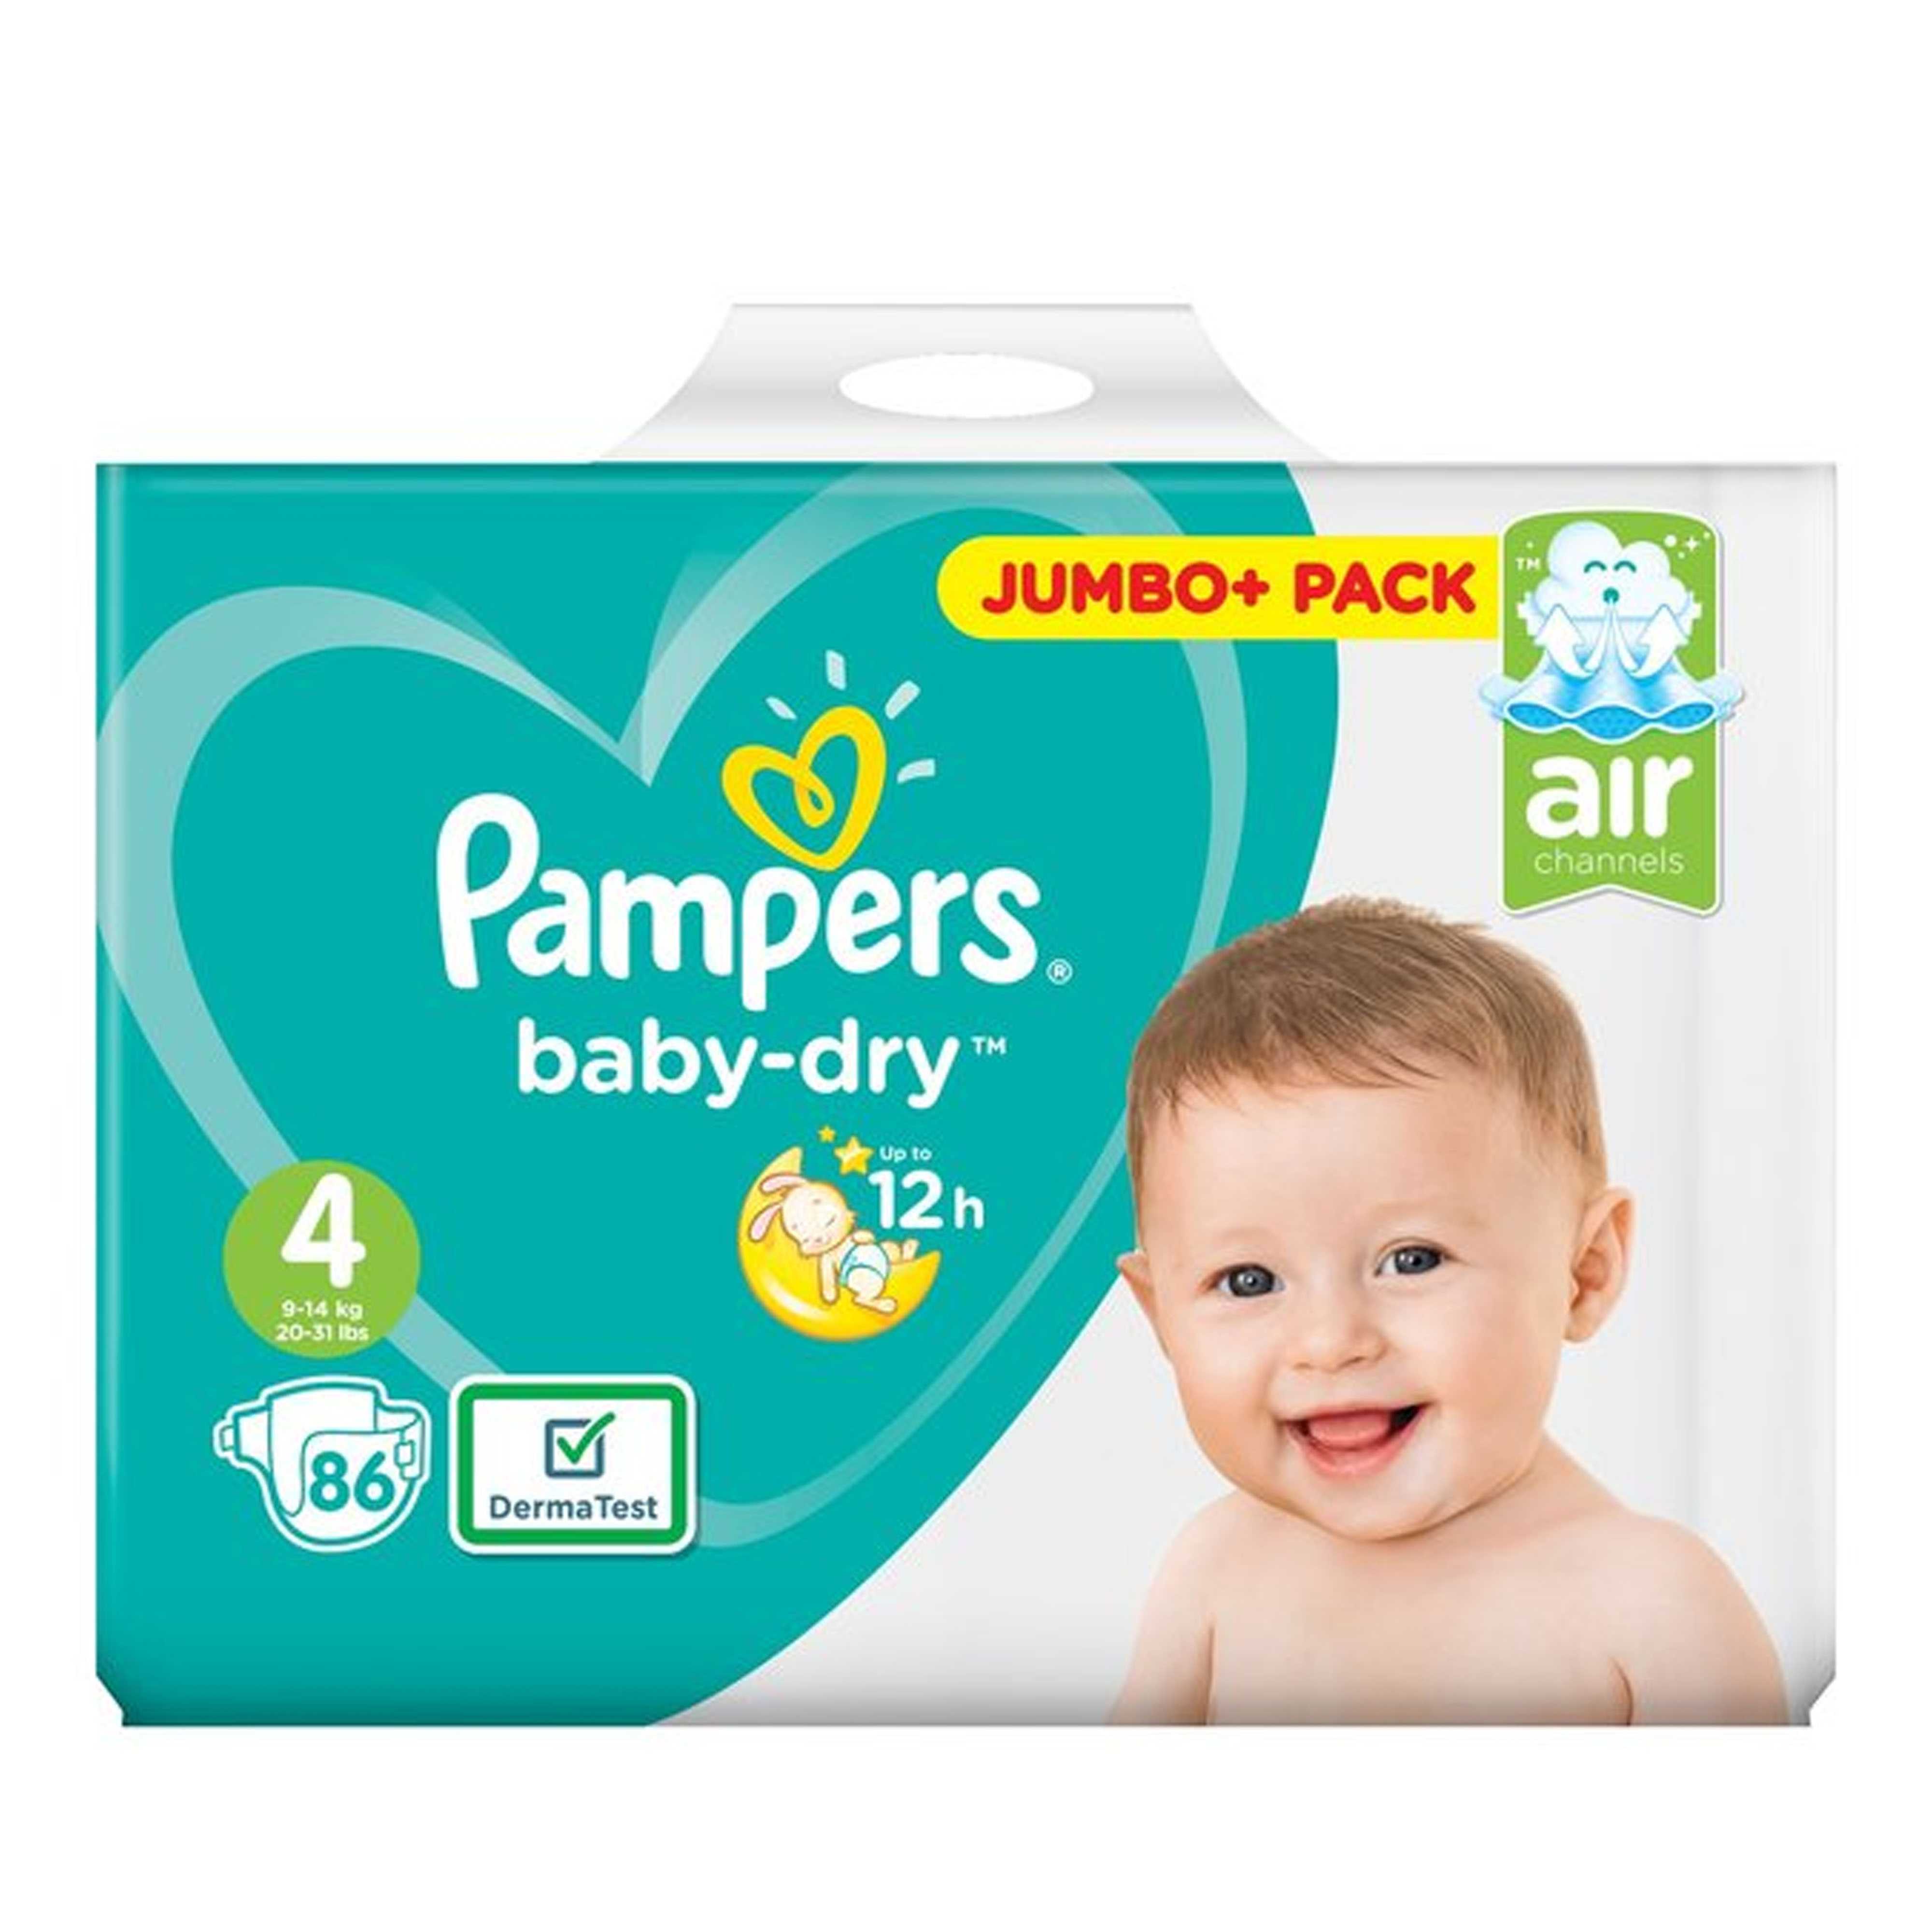 Pampers Baby Dry Size 4 Jumbo Plus Belt 9-14 kg Baby Diapers In Bangladesh - Buy Diapers Chaldal.comBaby Diapers In Bangladesh - Buy Diapers Online At Chaldal.com